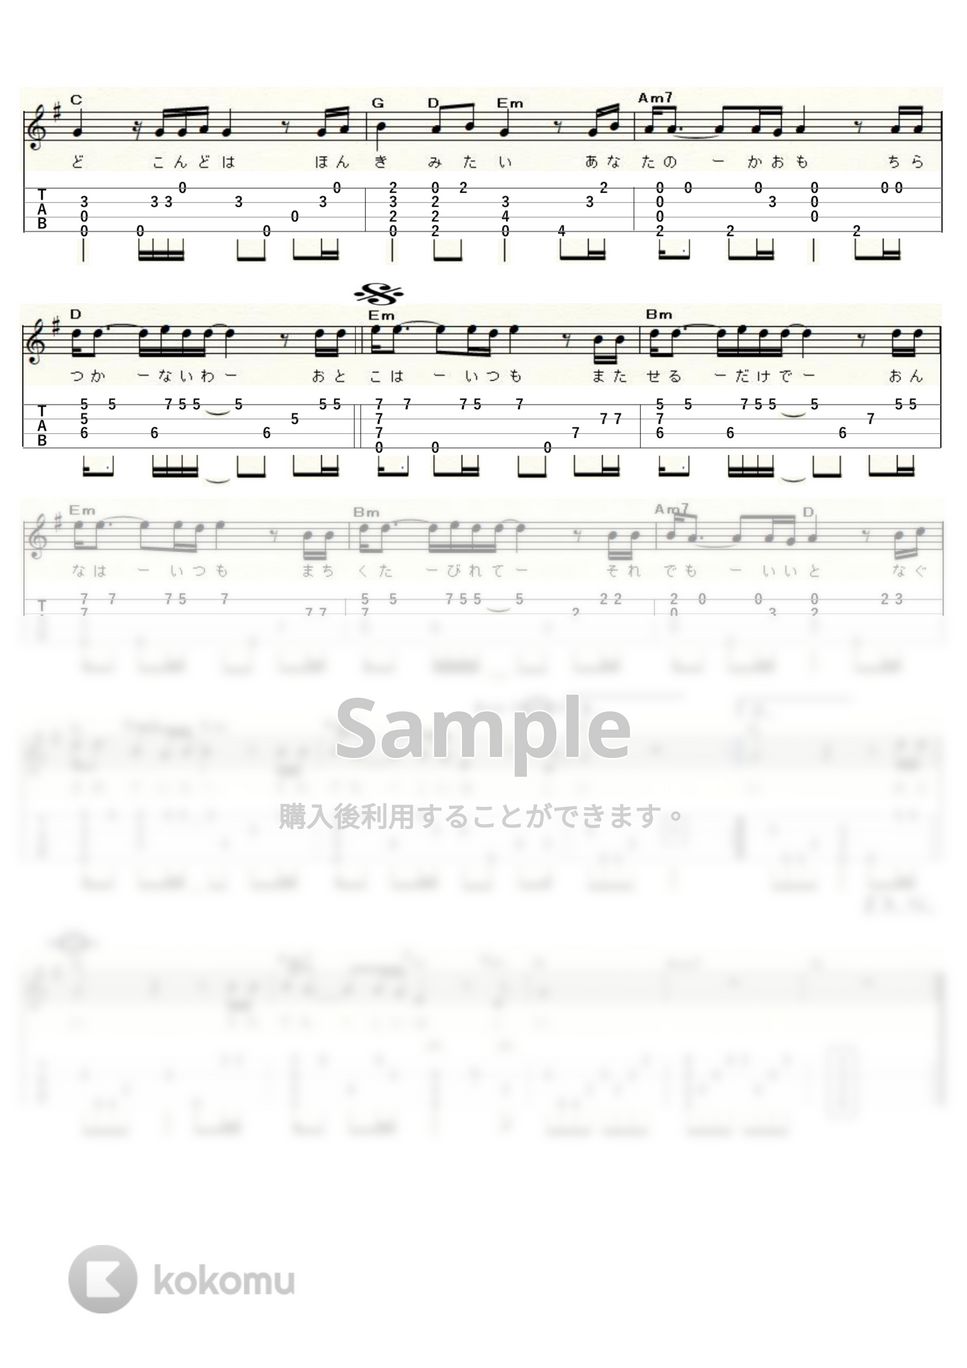 松山千春 - 恋 (Low-G) by ukulelepapa